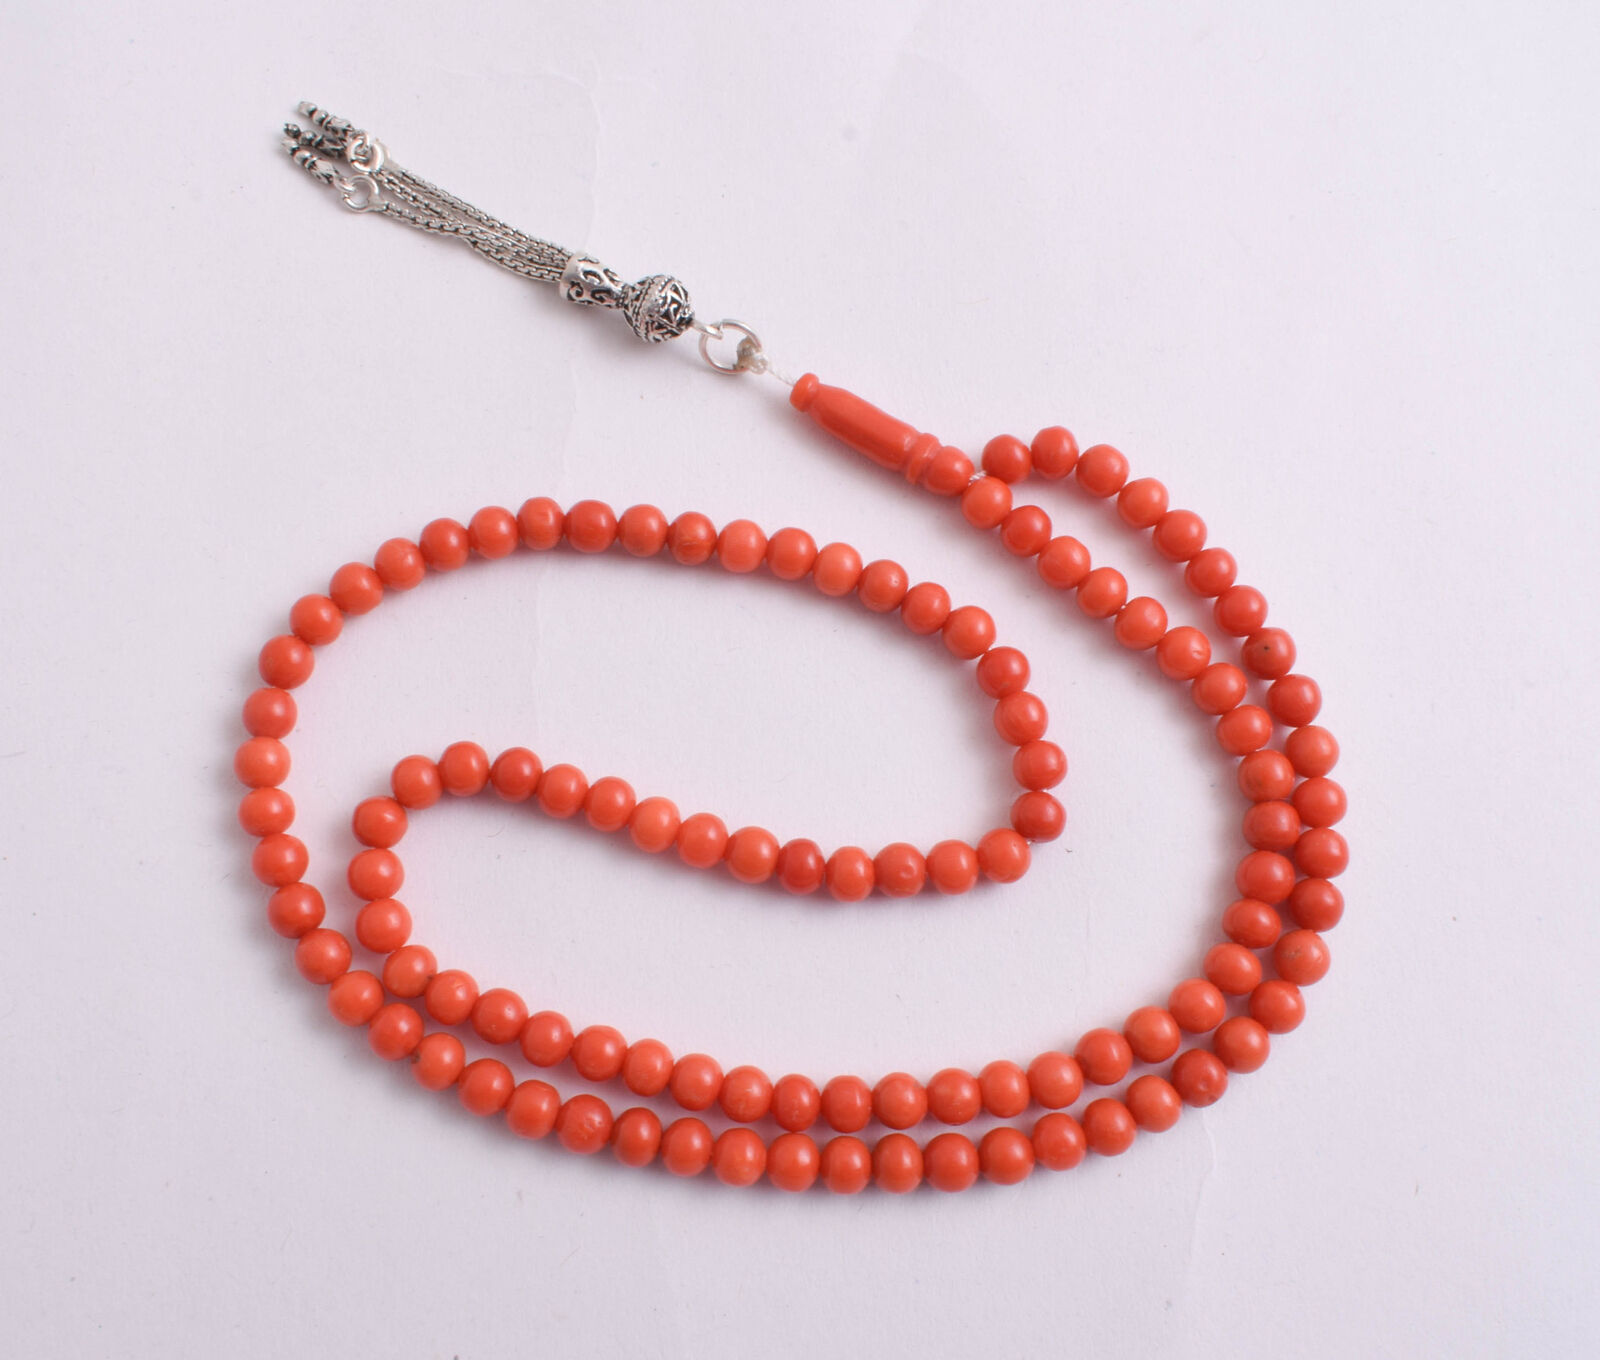 Vintage Red Coral Prayer Beads / Mediterranean Tunisian genuine red coral beads